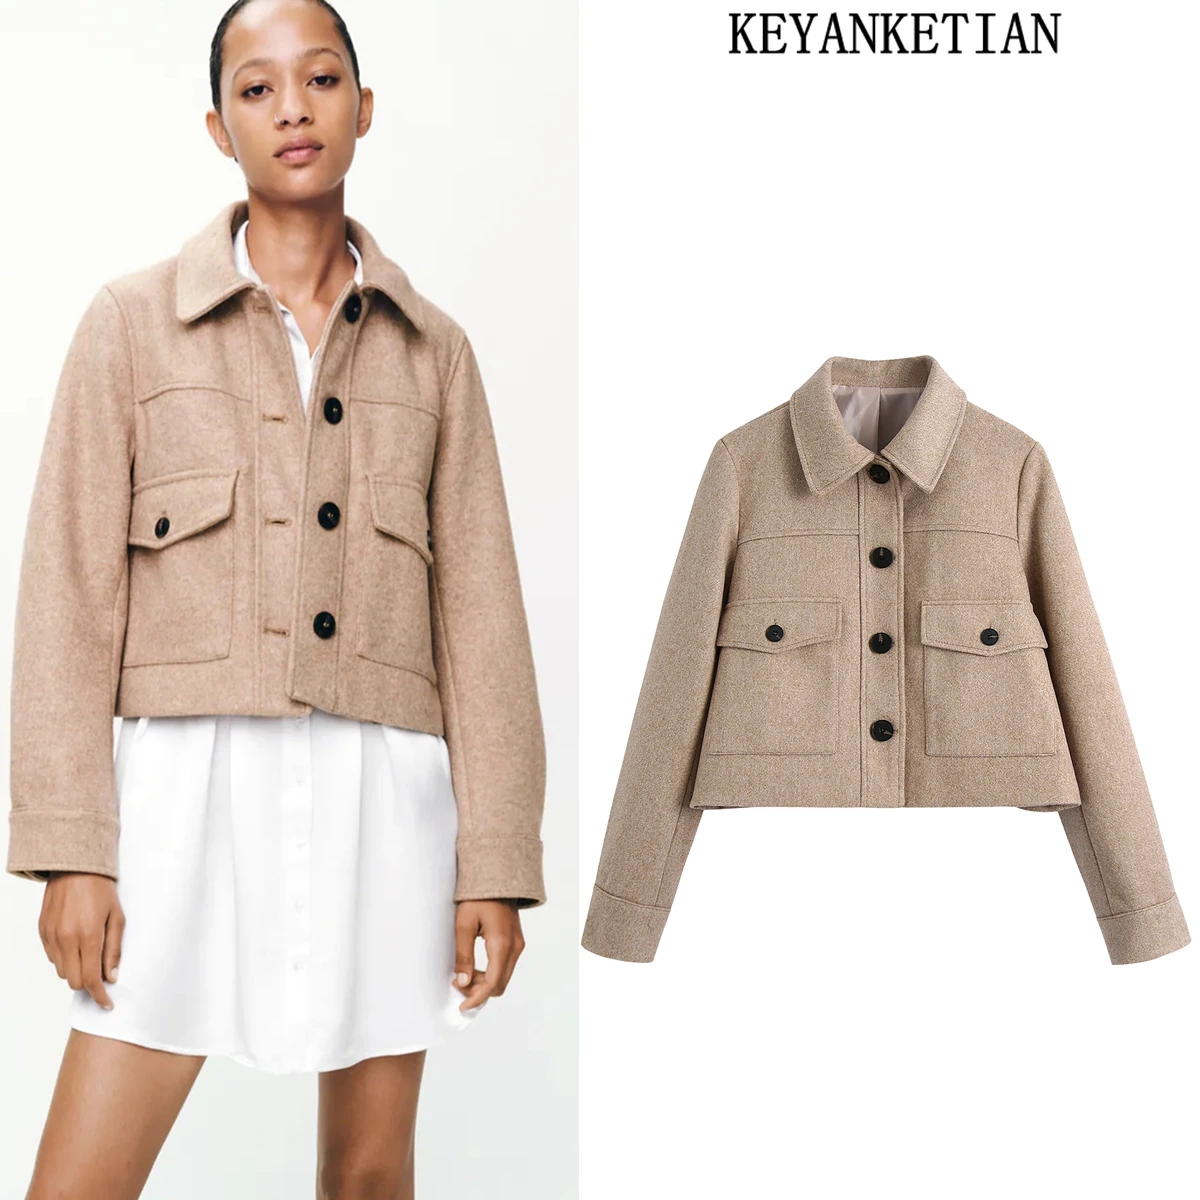 

KEYANKETIAN ZA Soft woolen coat women retro lapel long-sleeved casual shirt jacket loose buttoned office ladies jacket